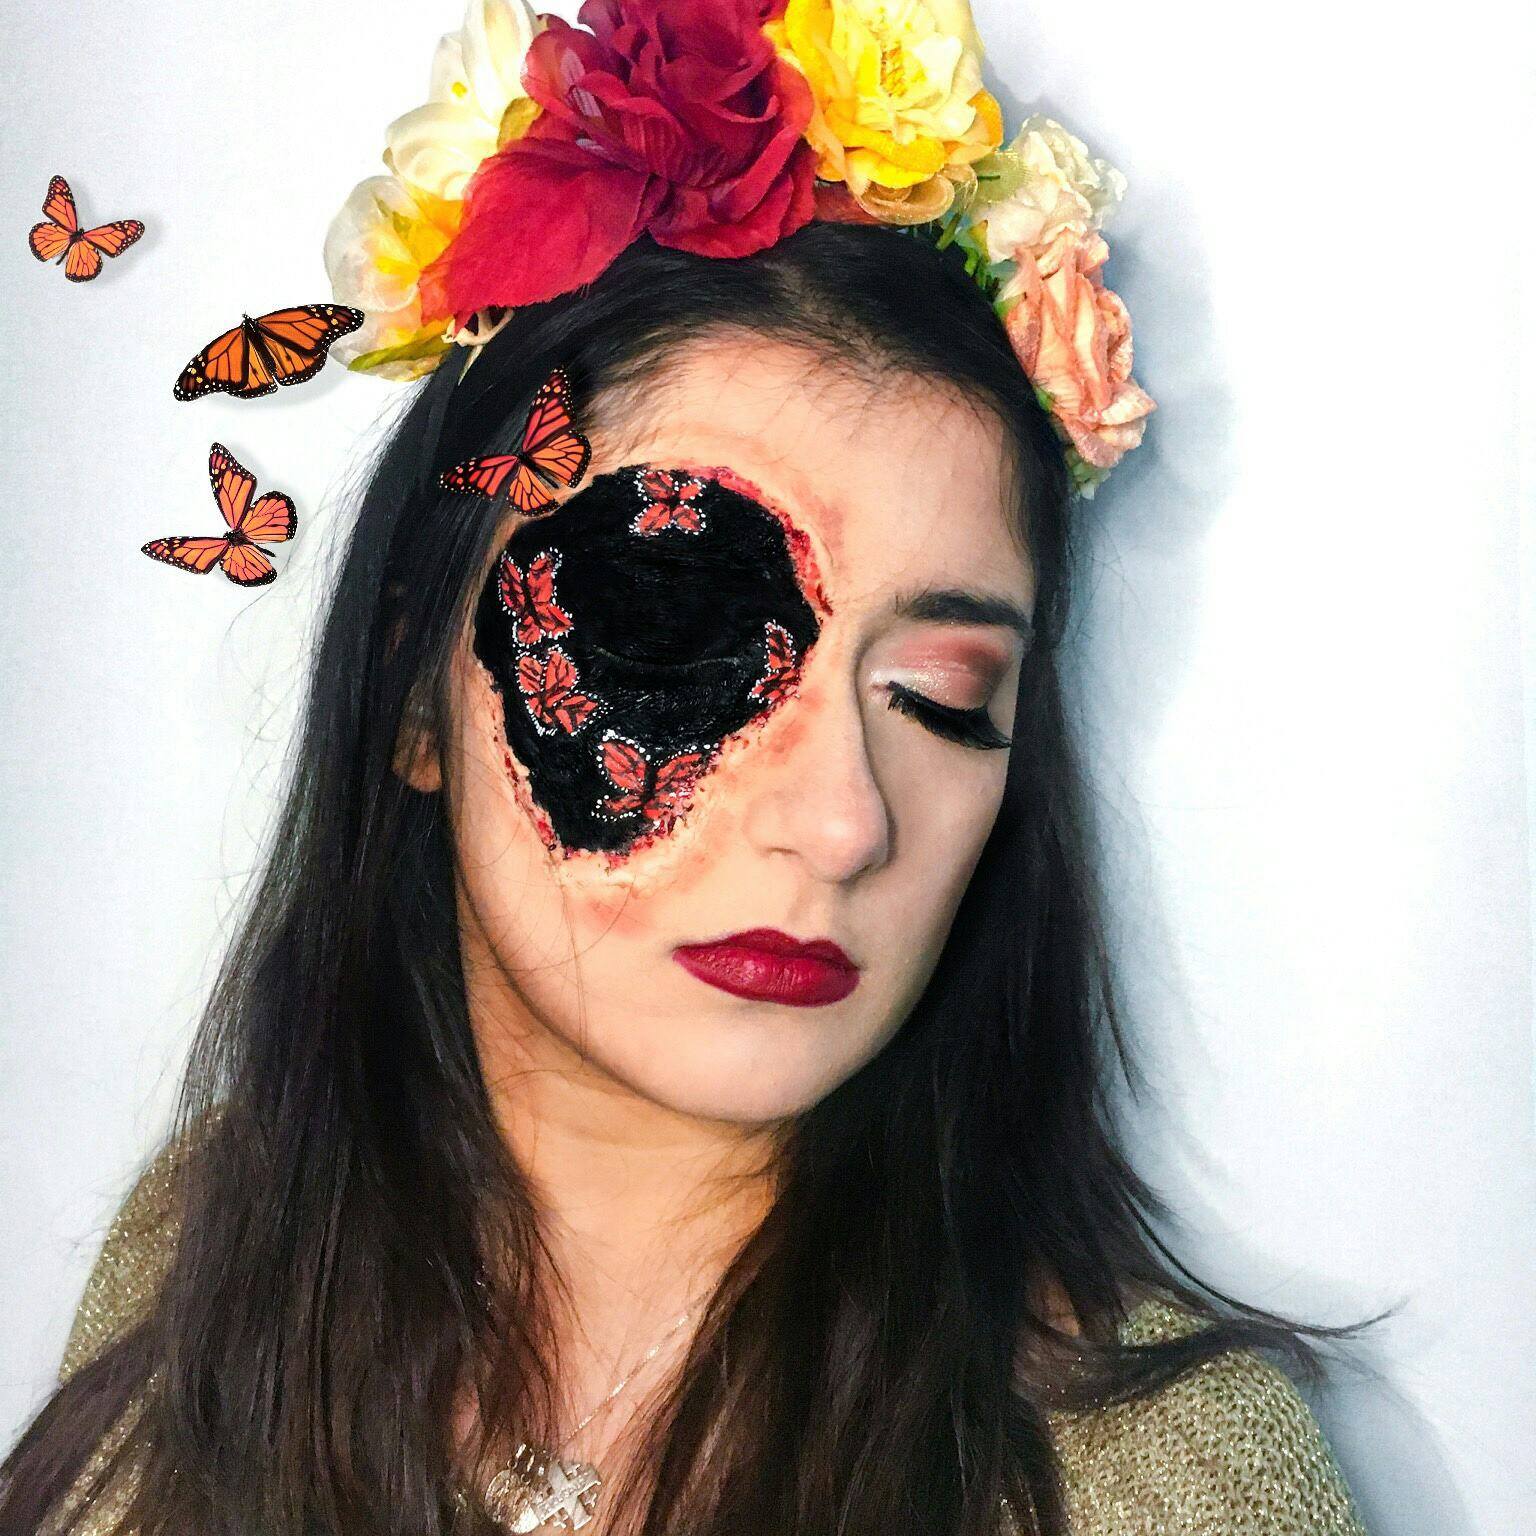 Butterfly SFX Makeup Video By Francesca Marchitelli